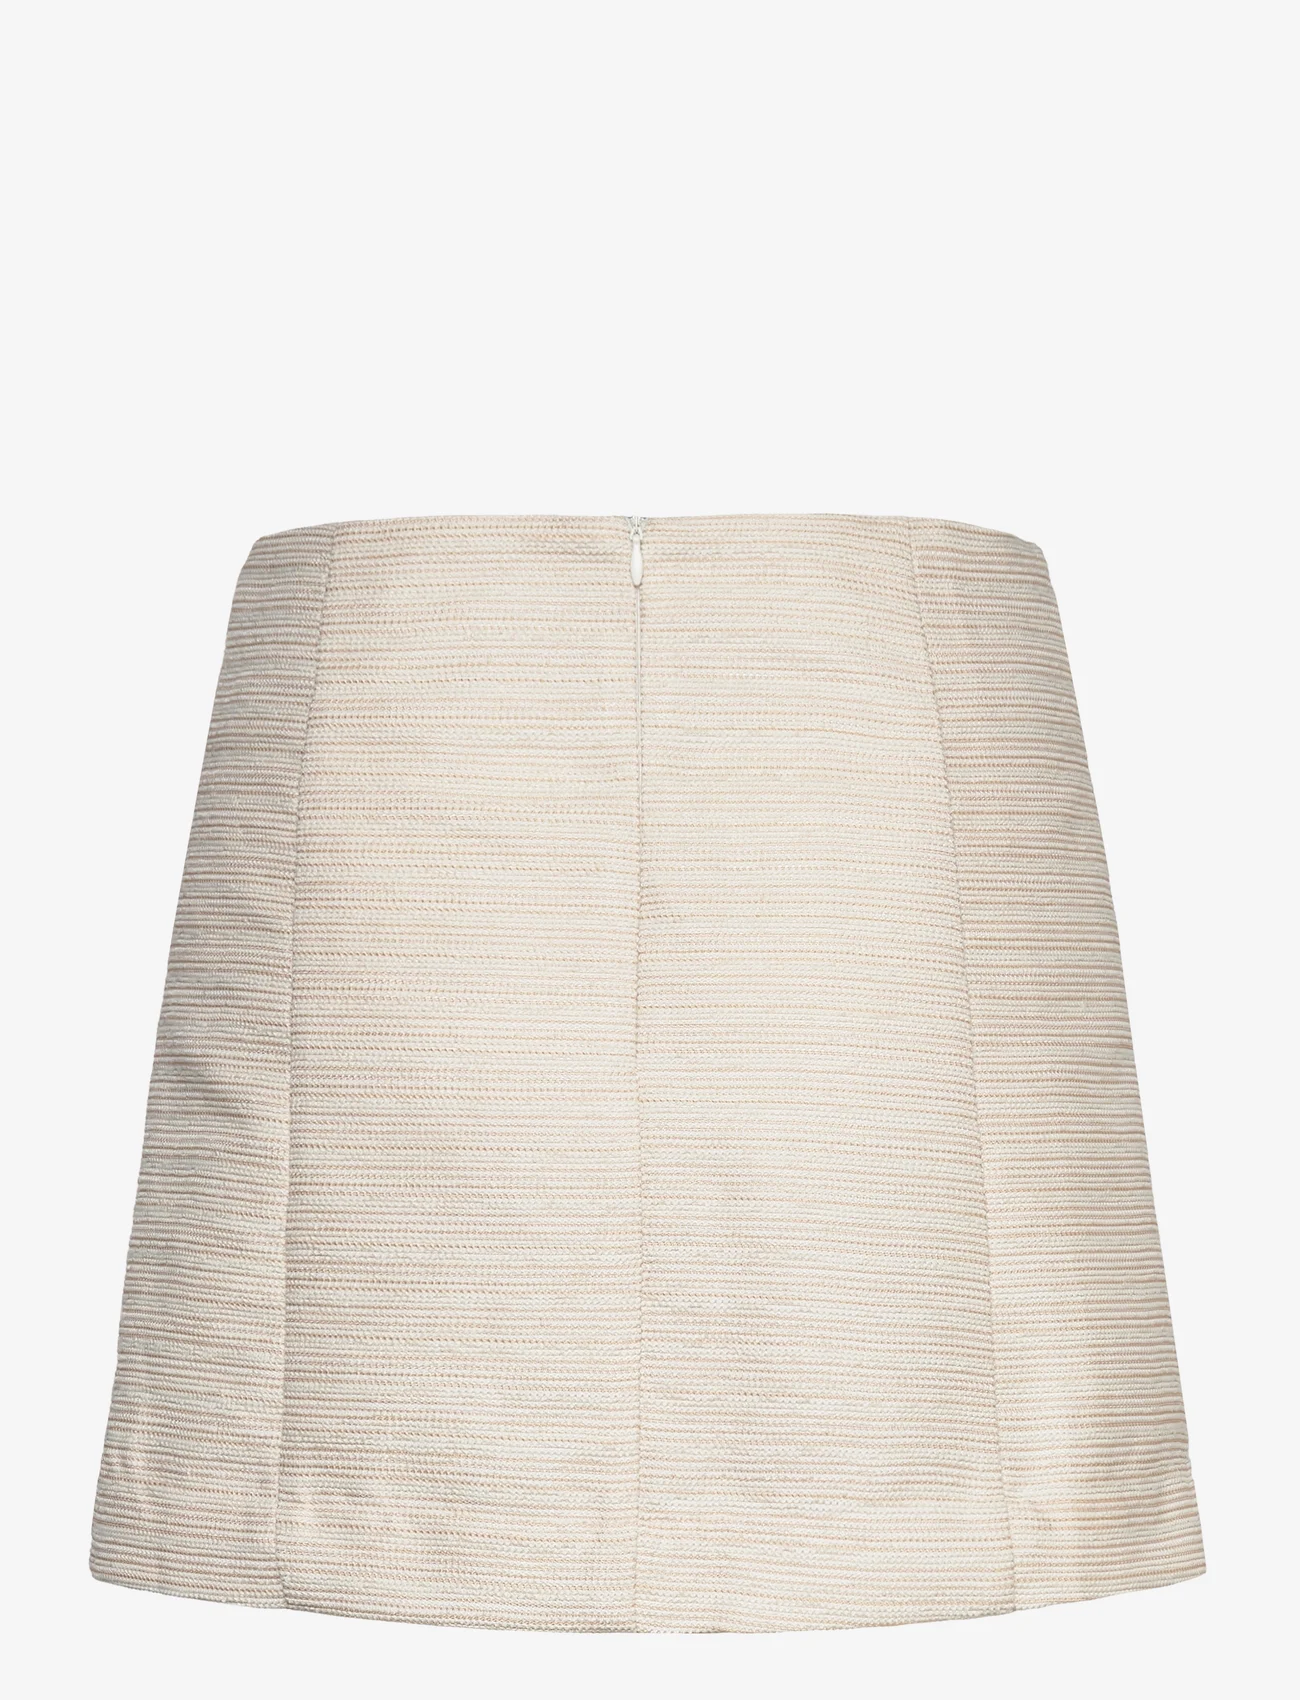 Second Female - Portofino Skirt - kurze röcke - ivory cream - 1